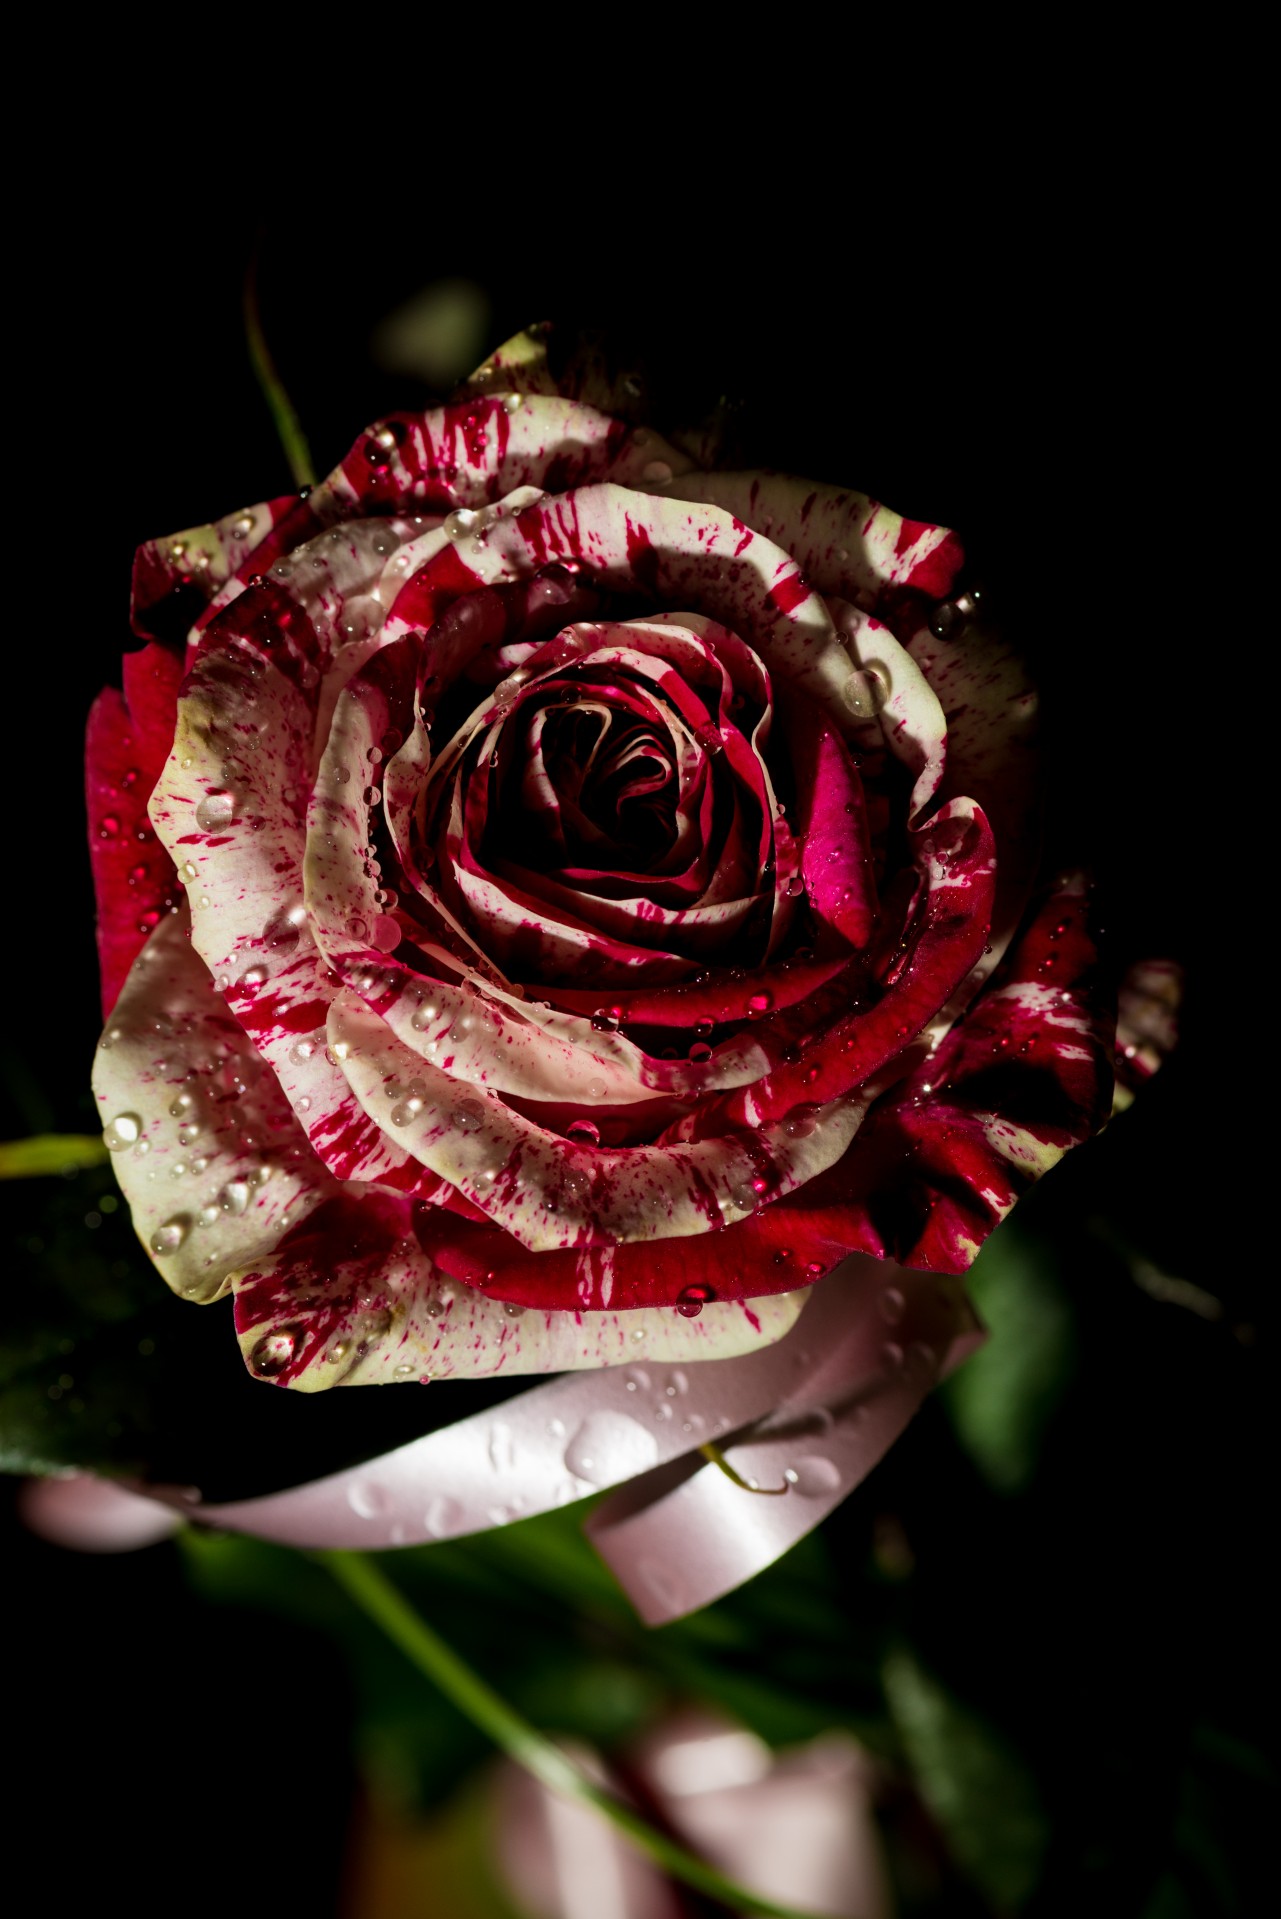 Harlequin Rose